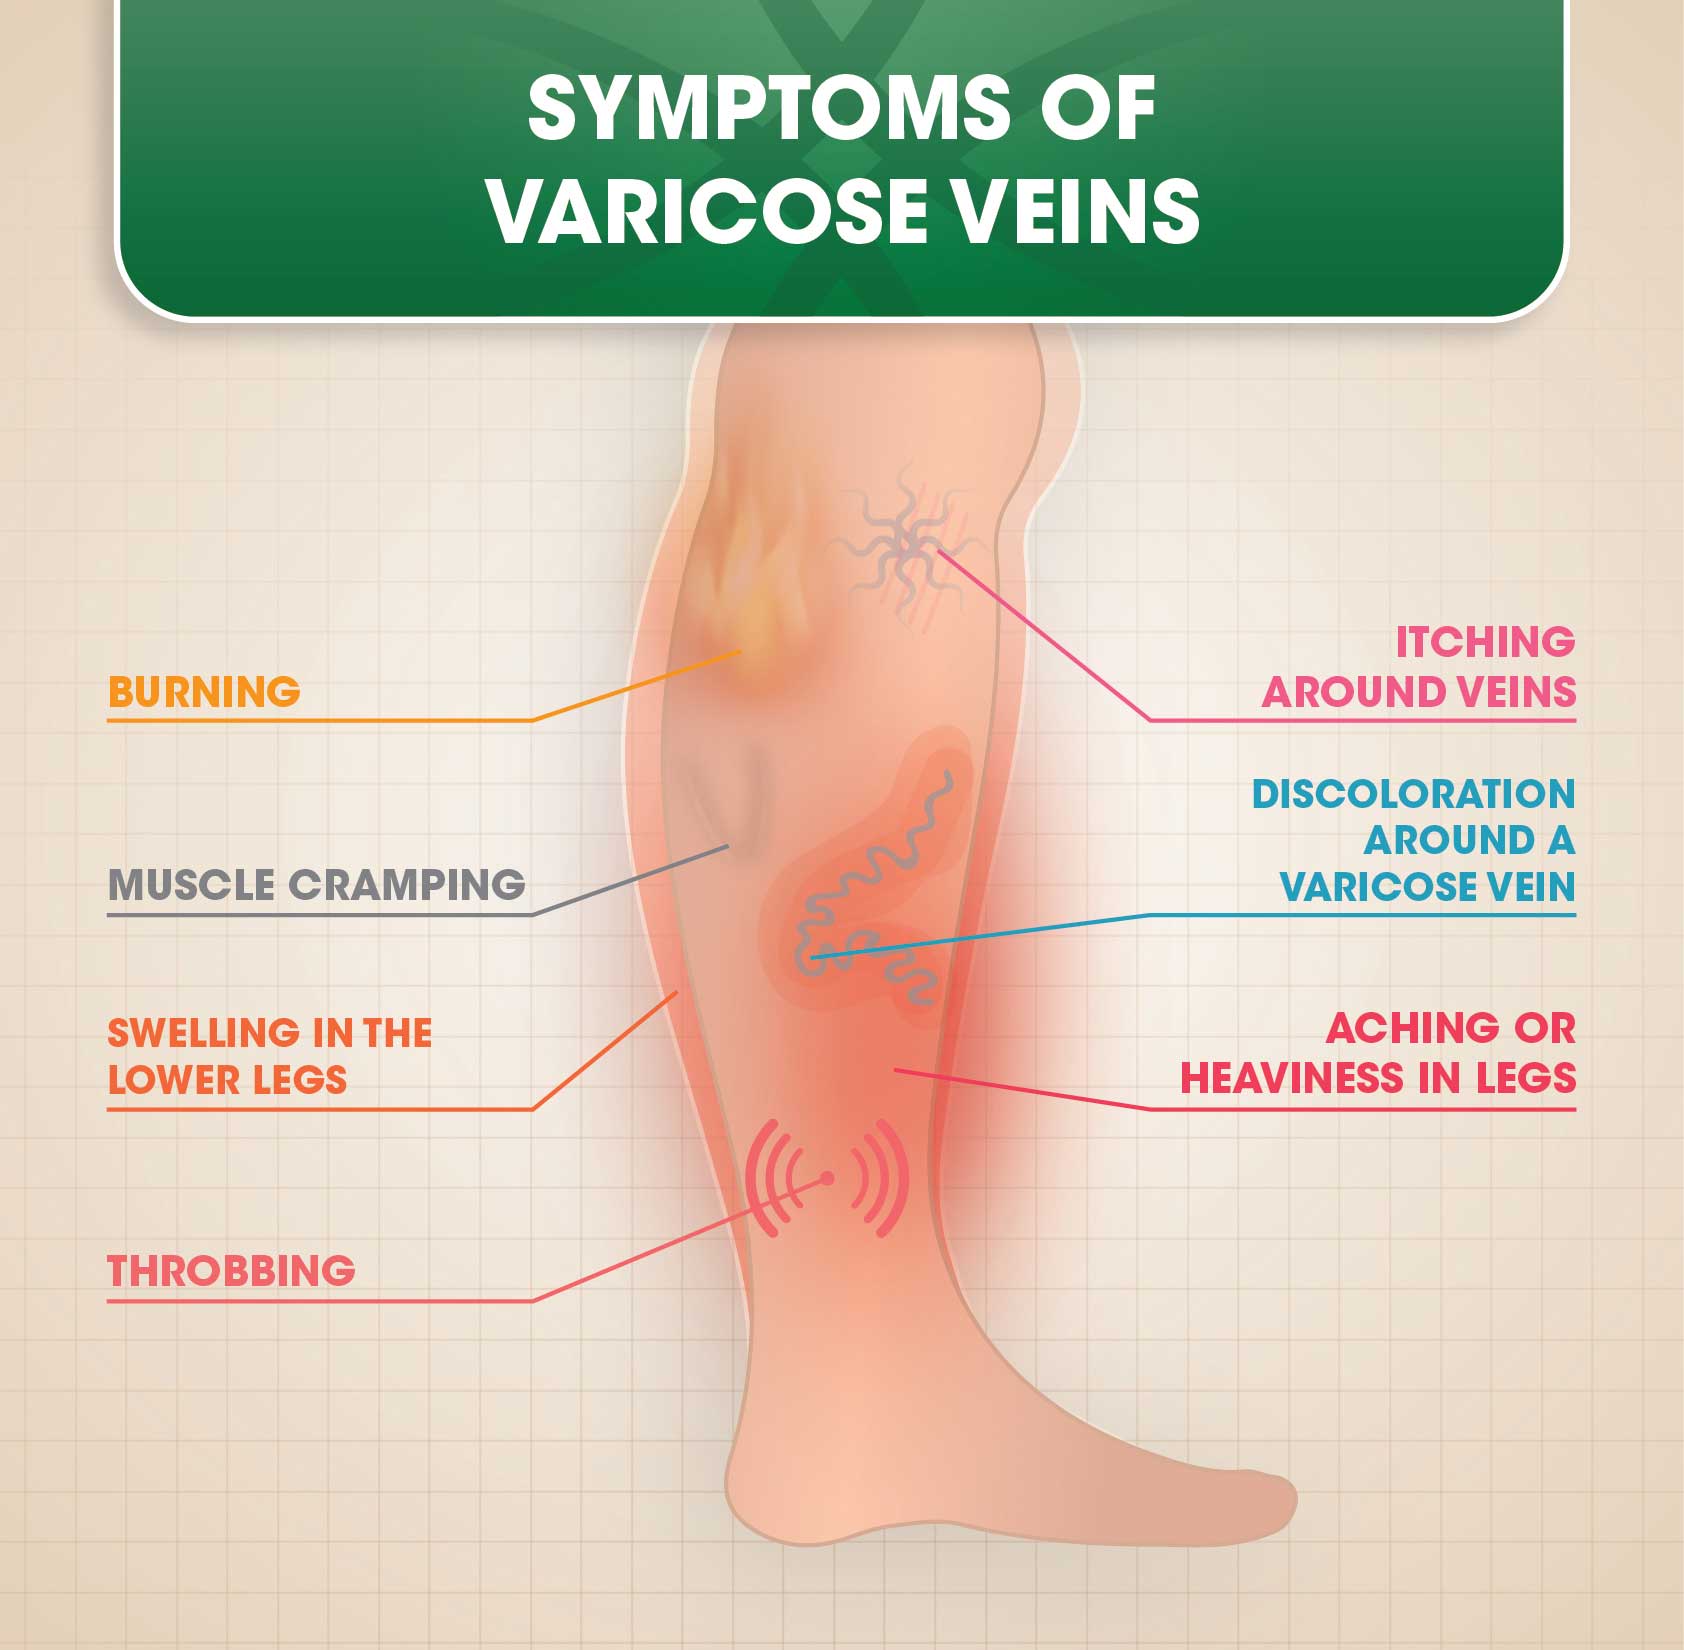 Symptoms of Varicose Veins